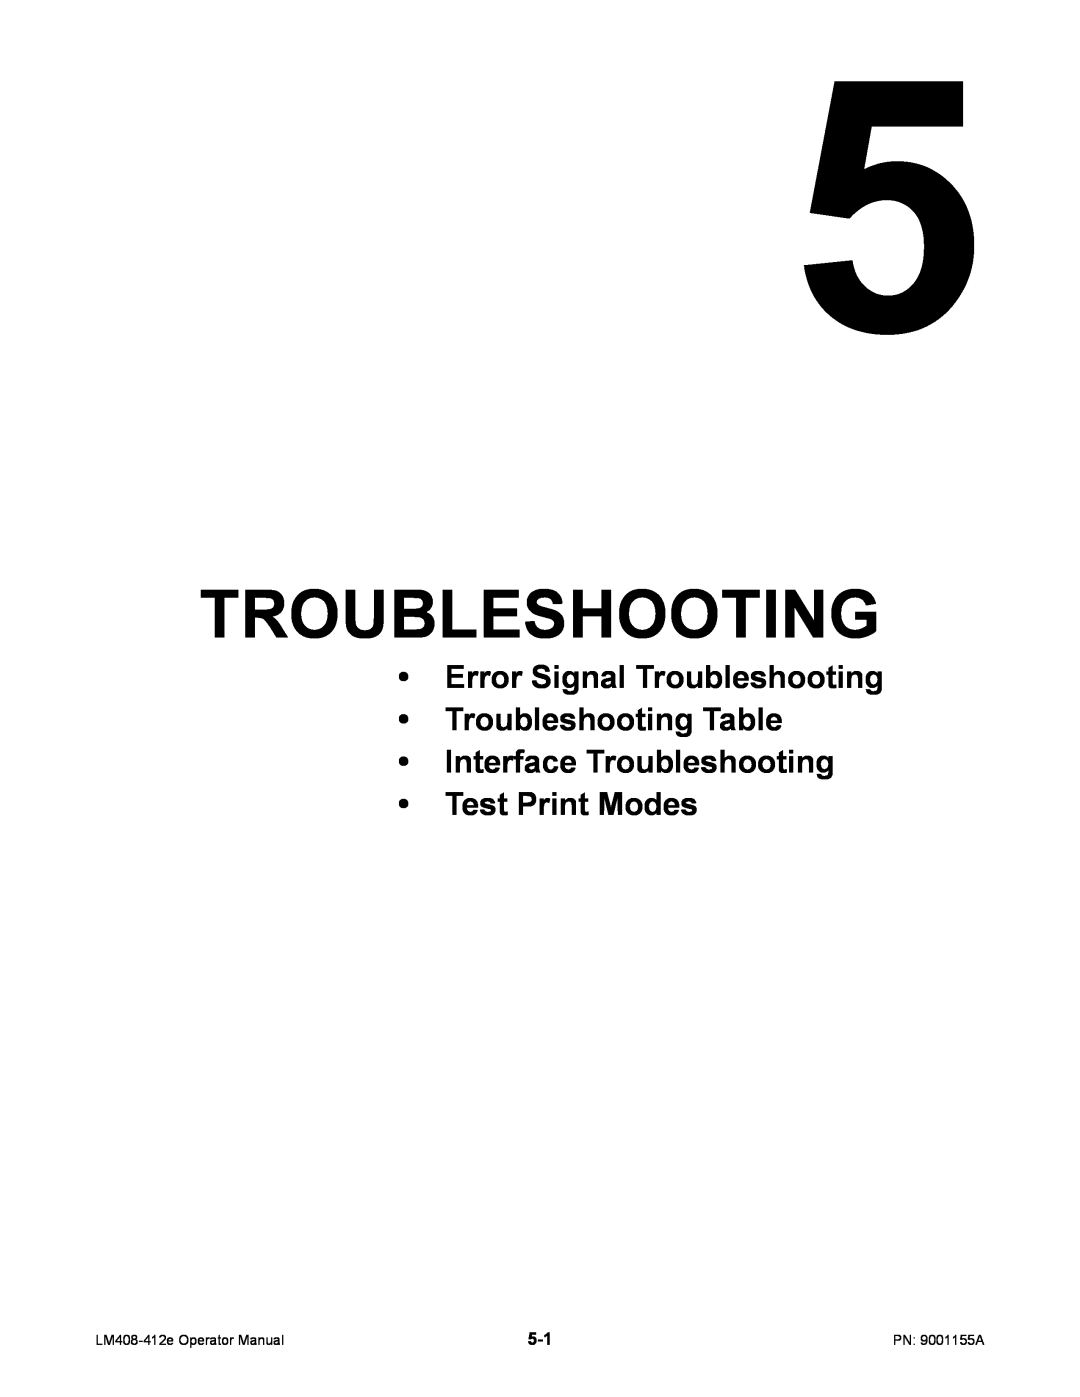 SATO LM408/412E manual Error Signal Troubleshooting Troubleshooting Table, Interface Troubleshooting Test Print Modes 